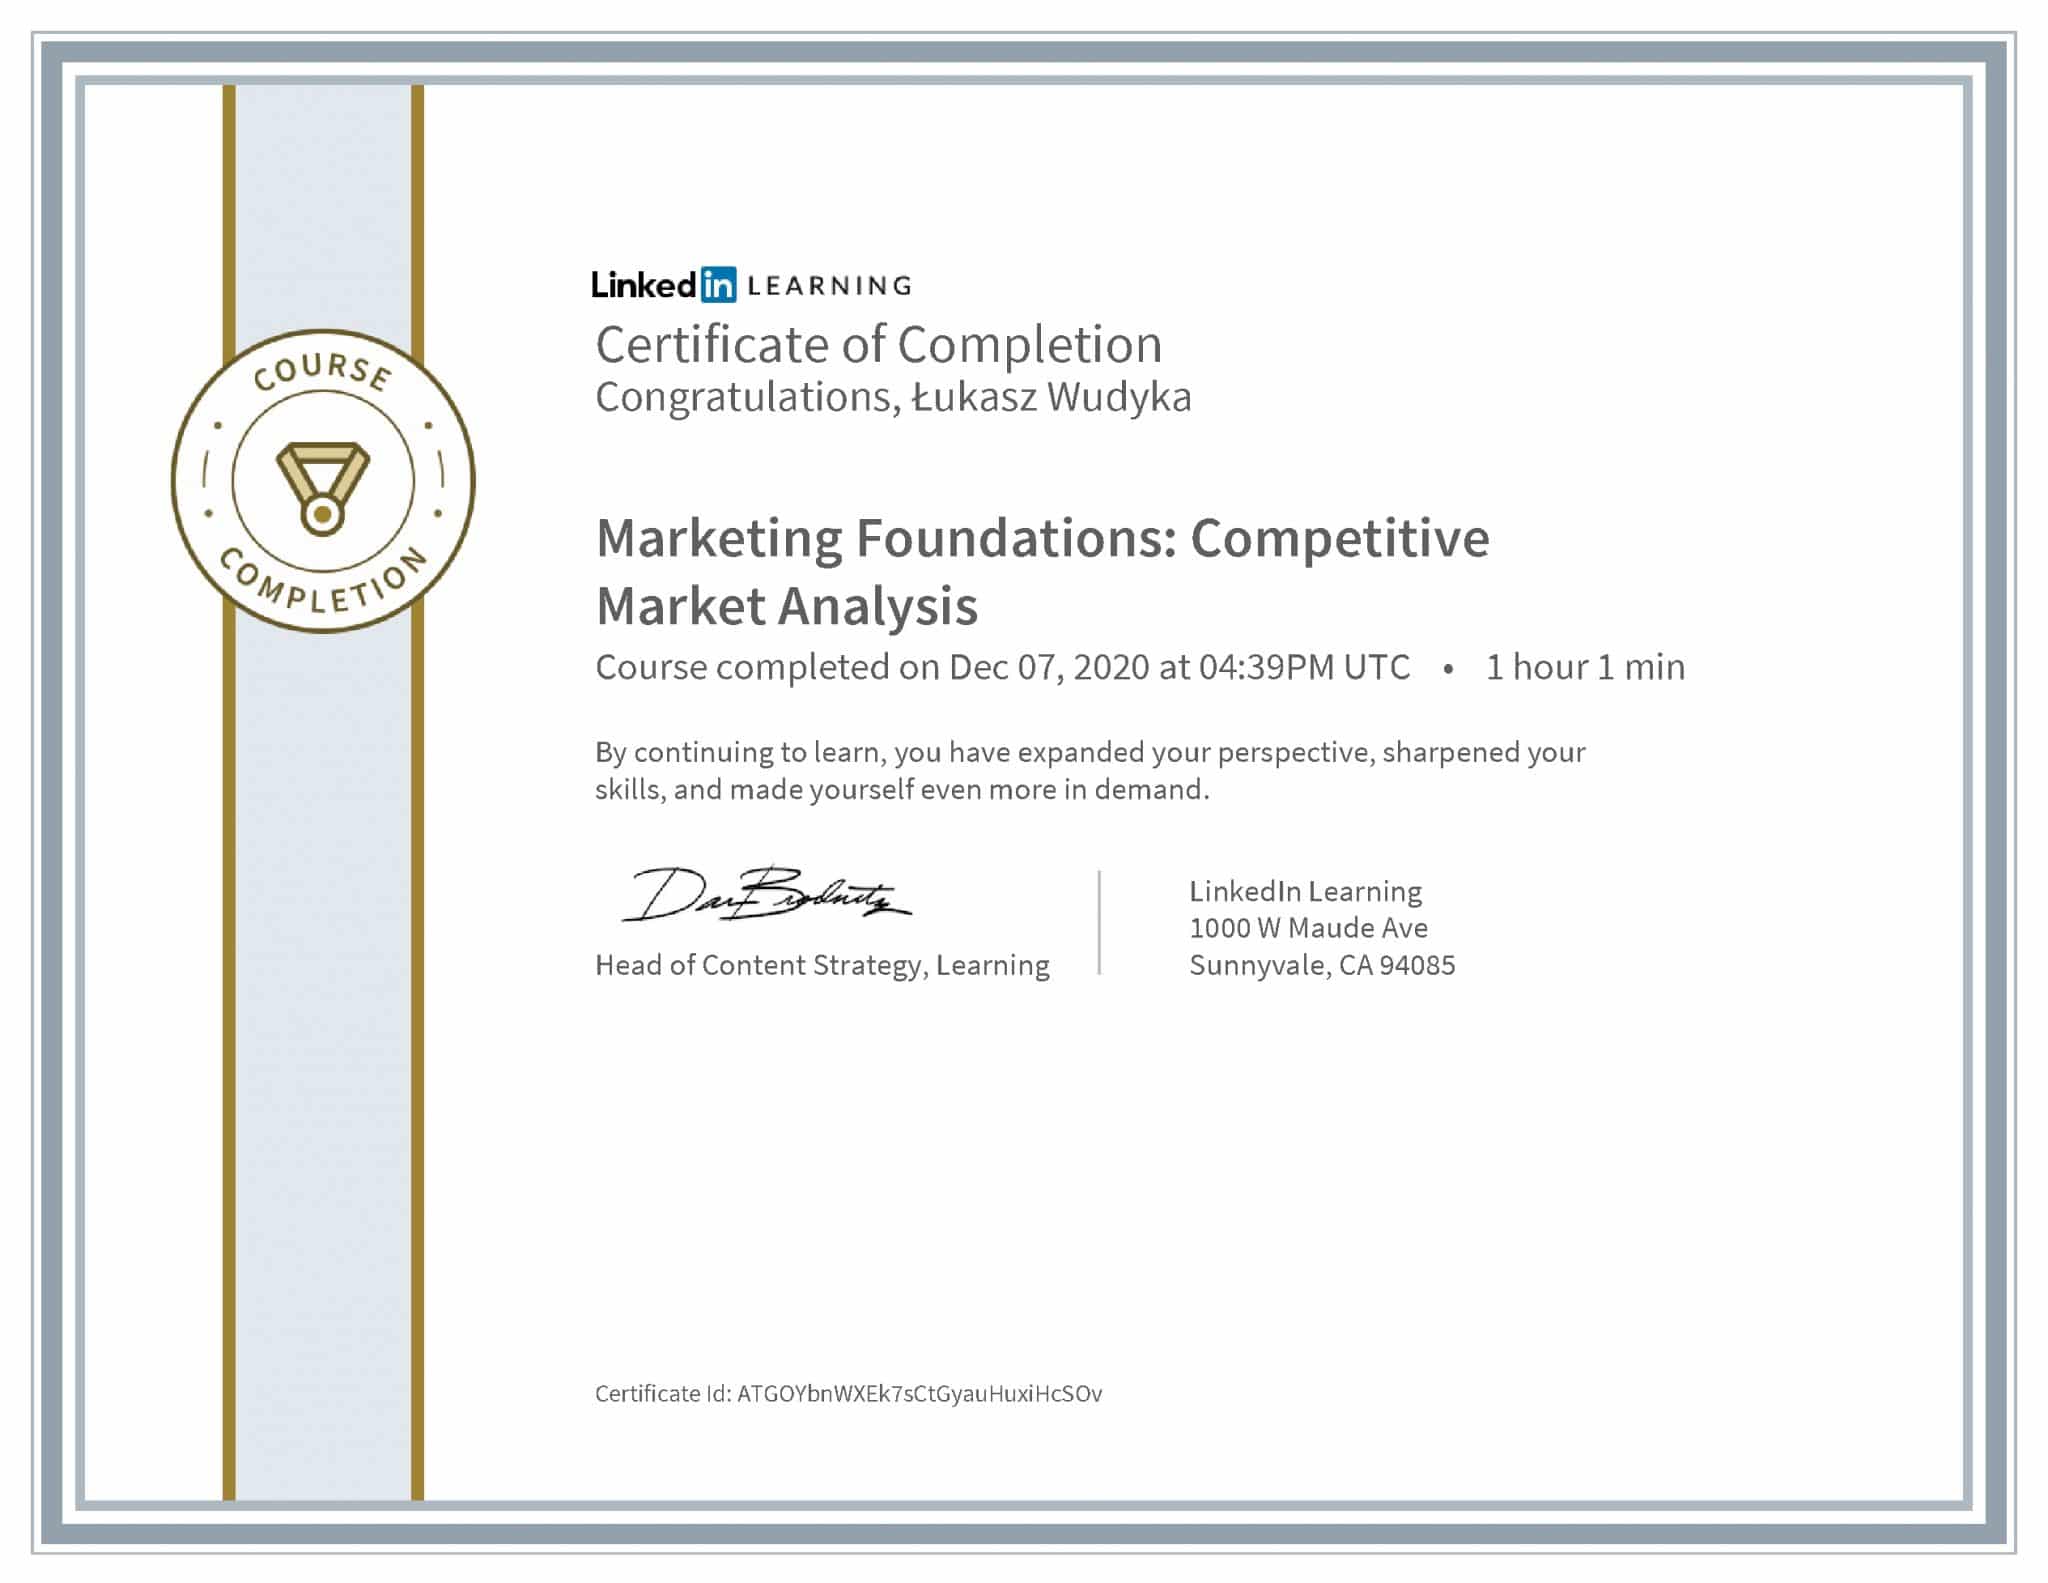 Łukasz Wudyka certyfikat LinkedIn Marketing Foundations: Competitive Market Analysis